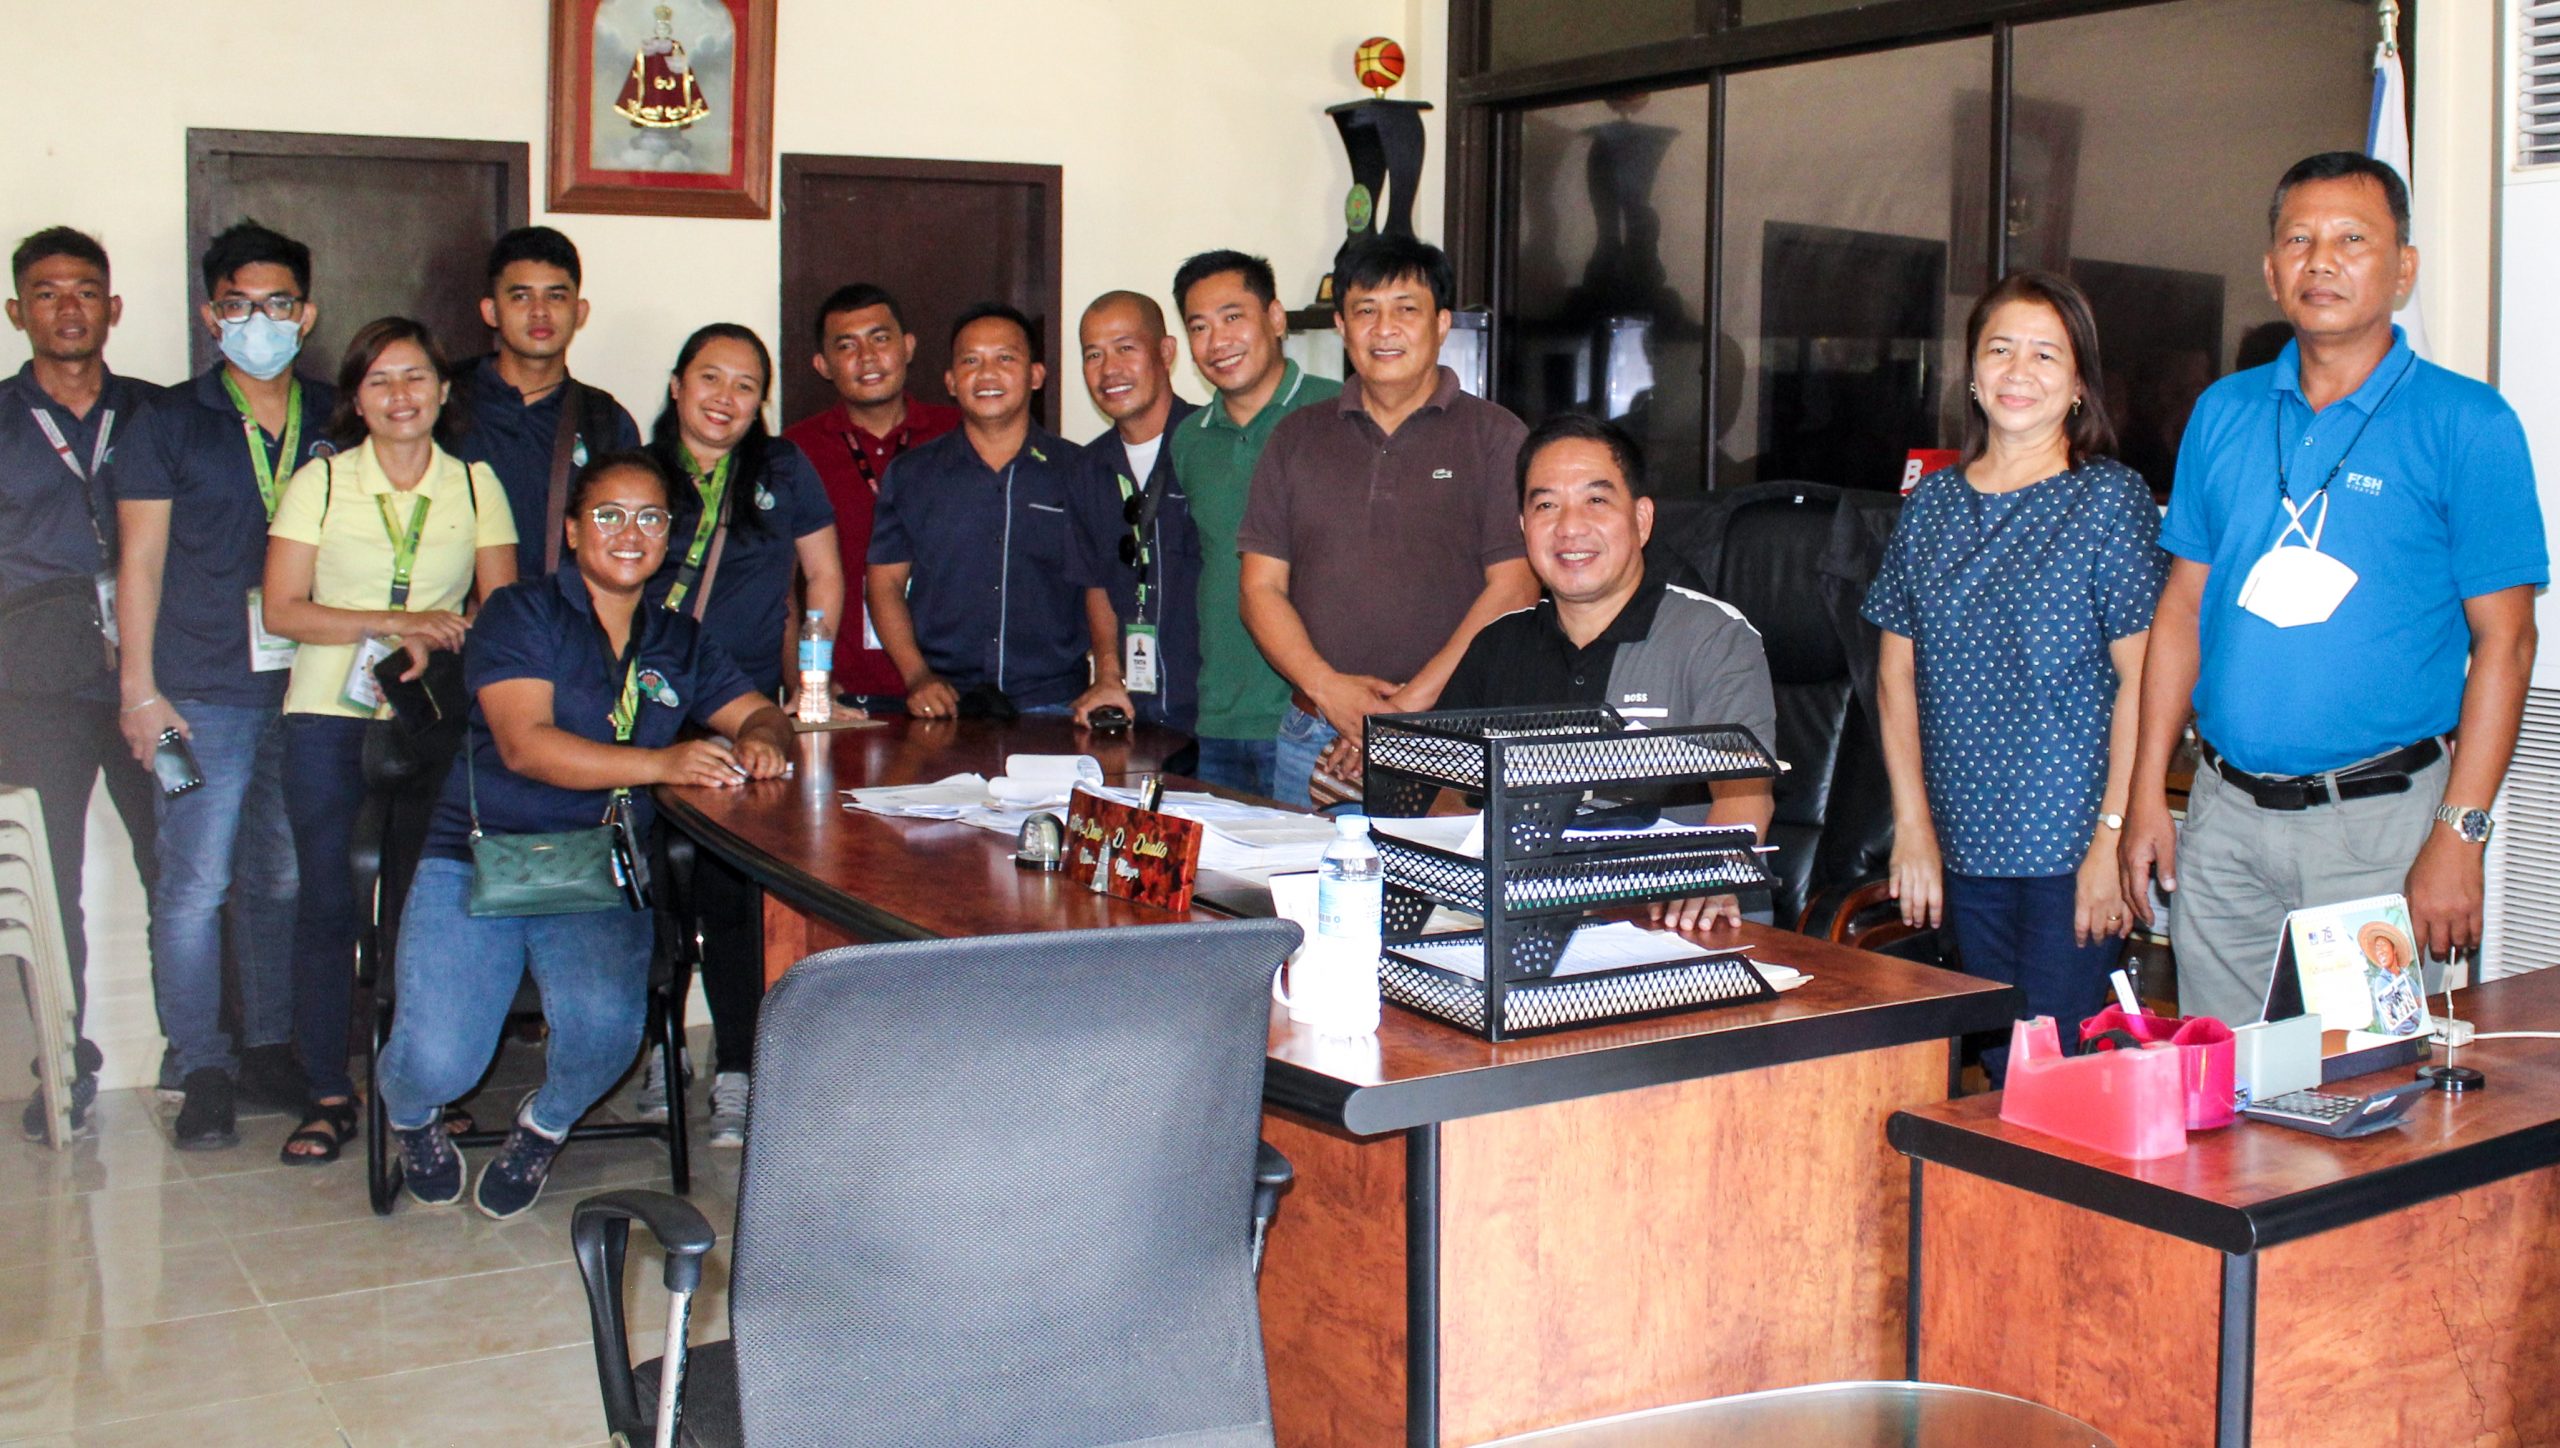 Bohol Inter-agency cooperation strengthens through Director’s visit